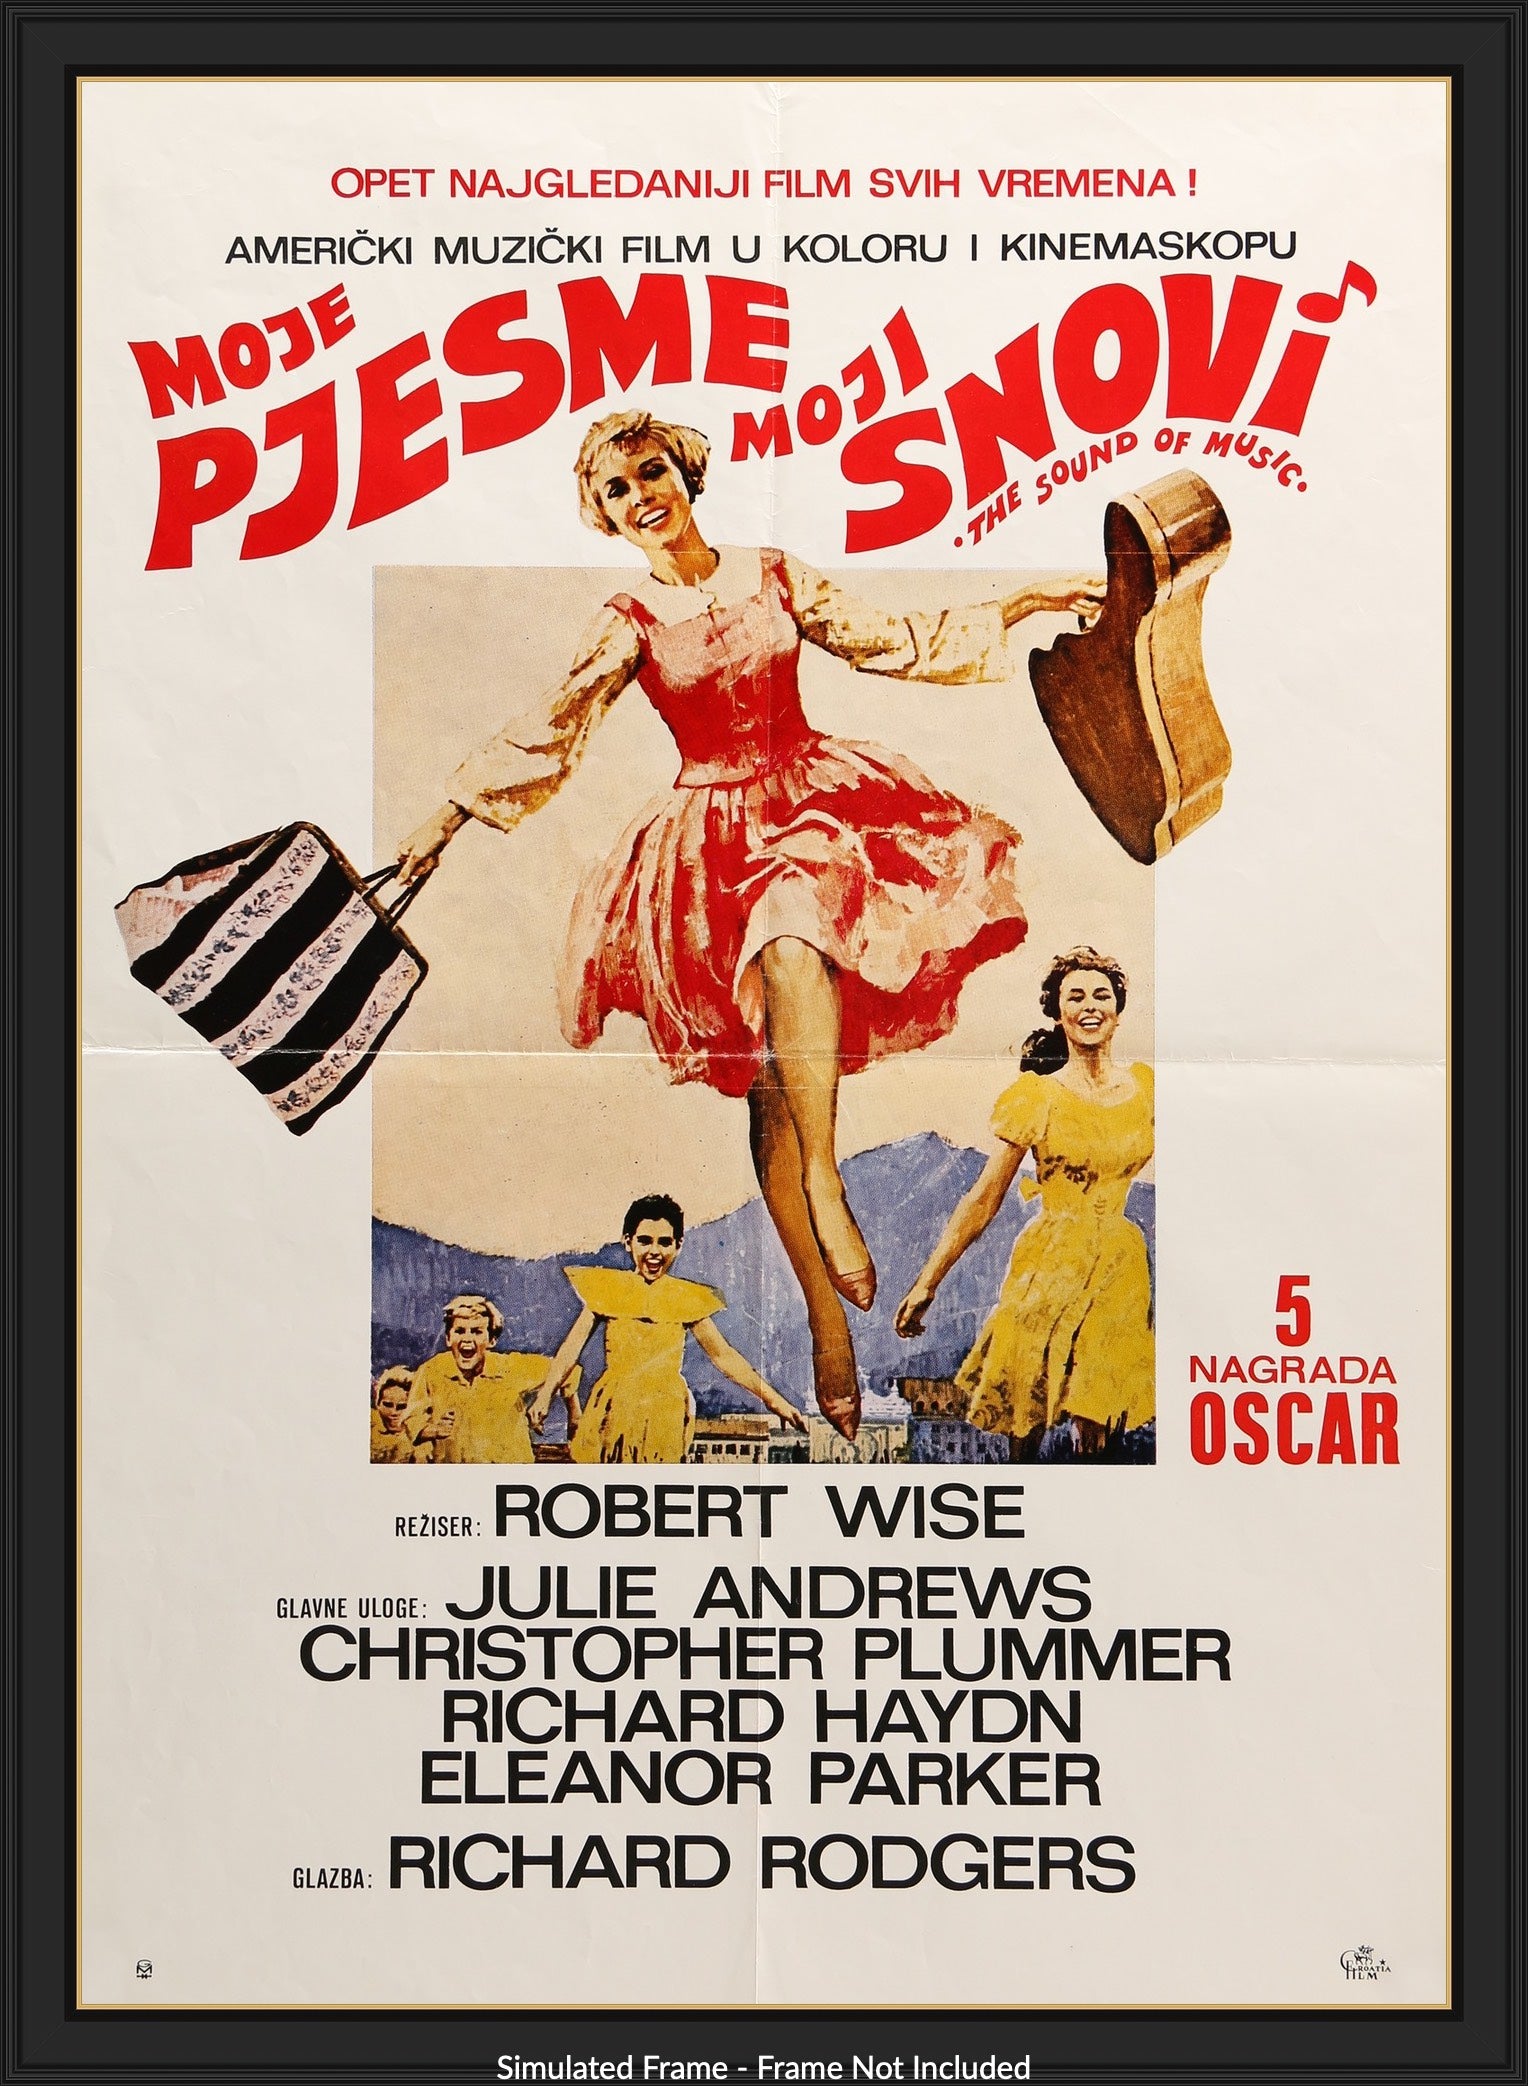 Sound of Music (1965) original movie poster for sale at Original Film Art